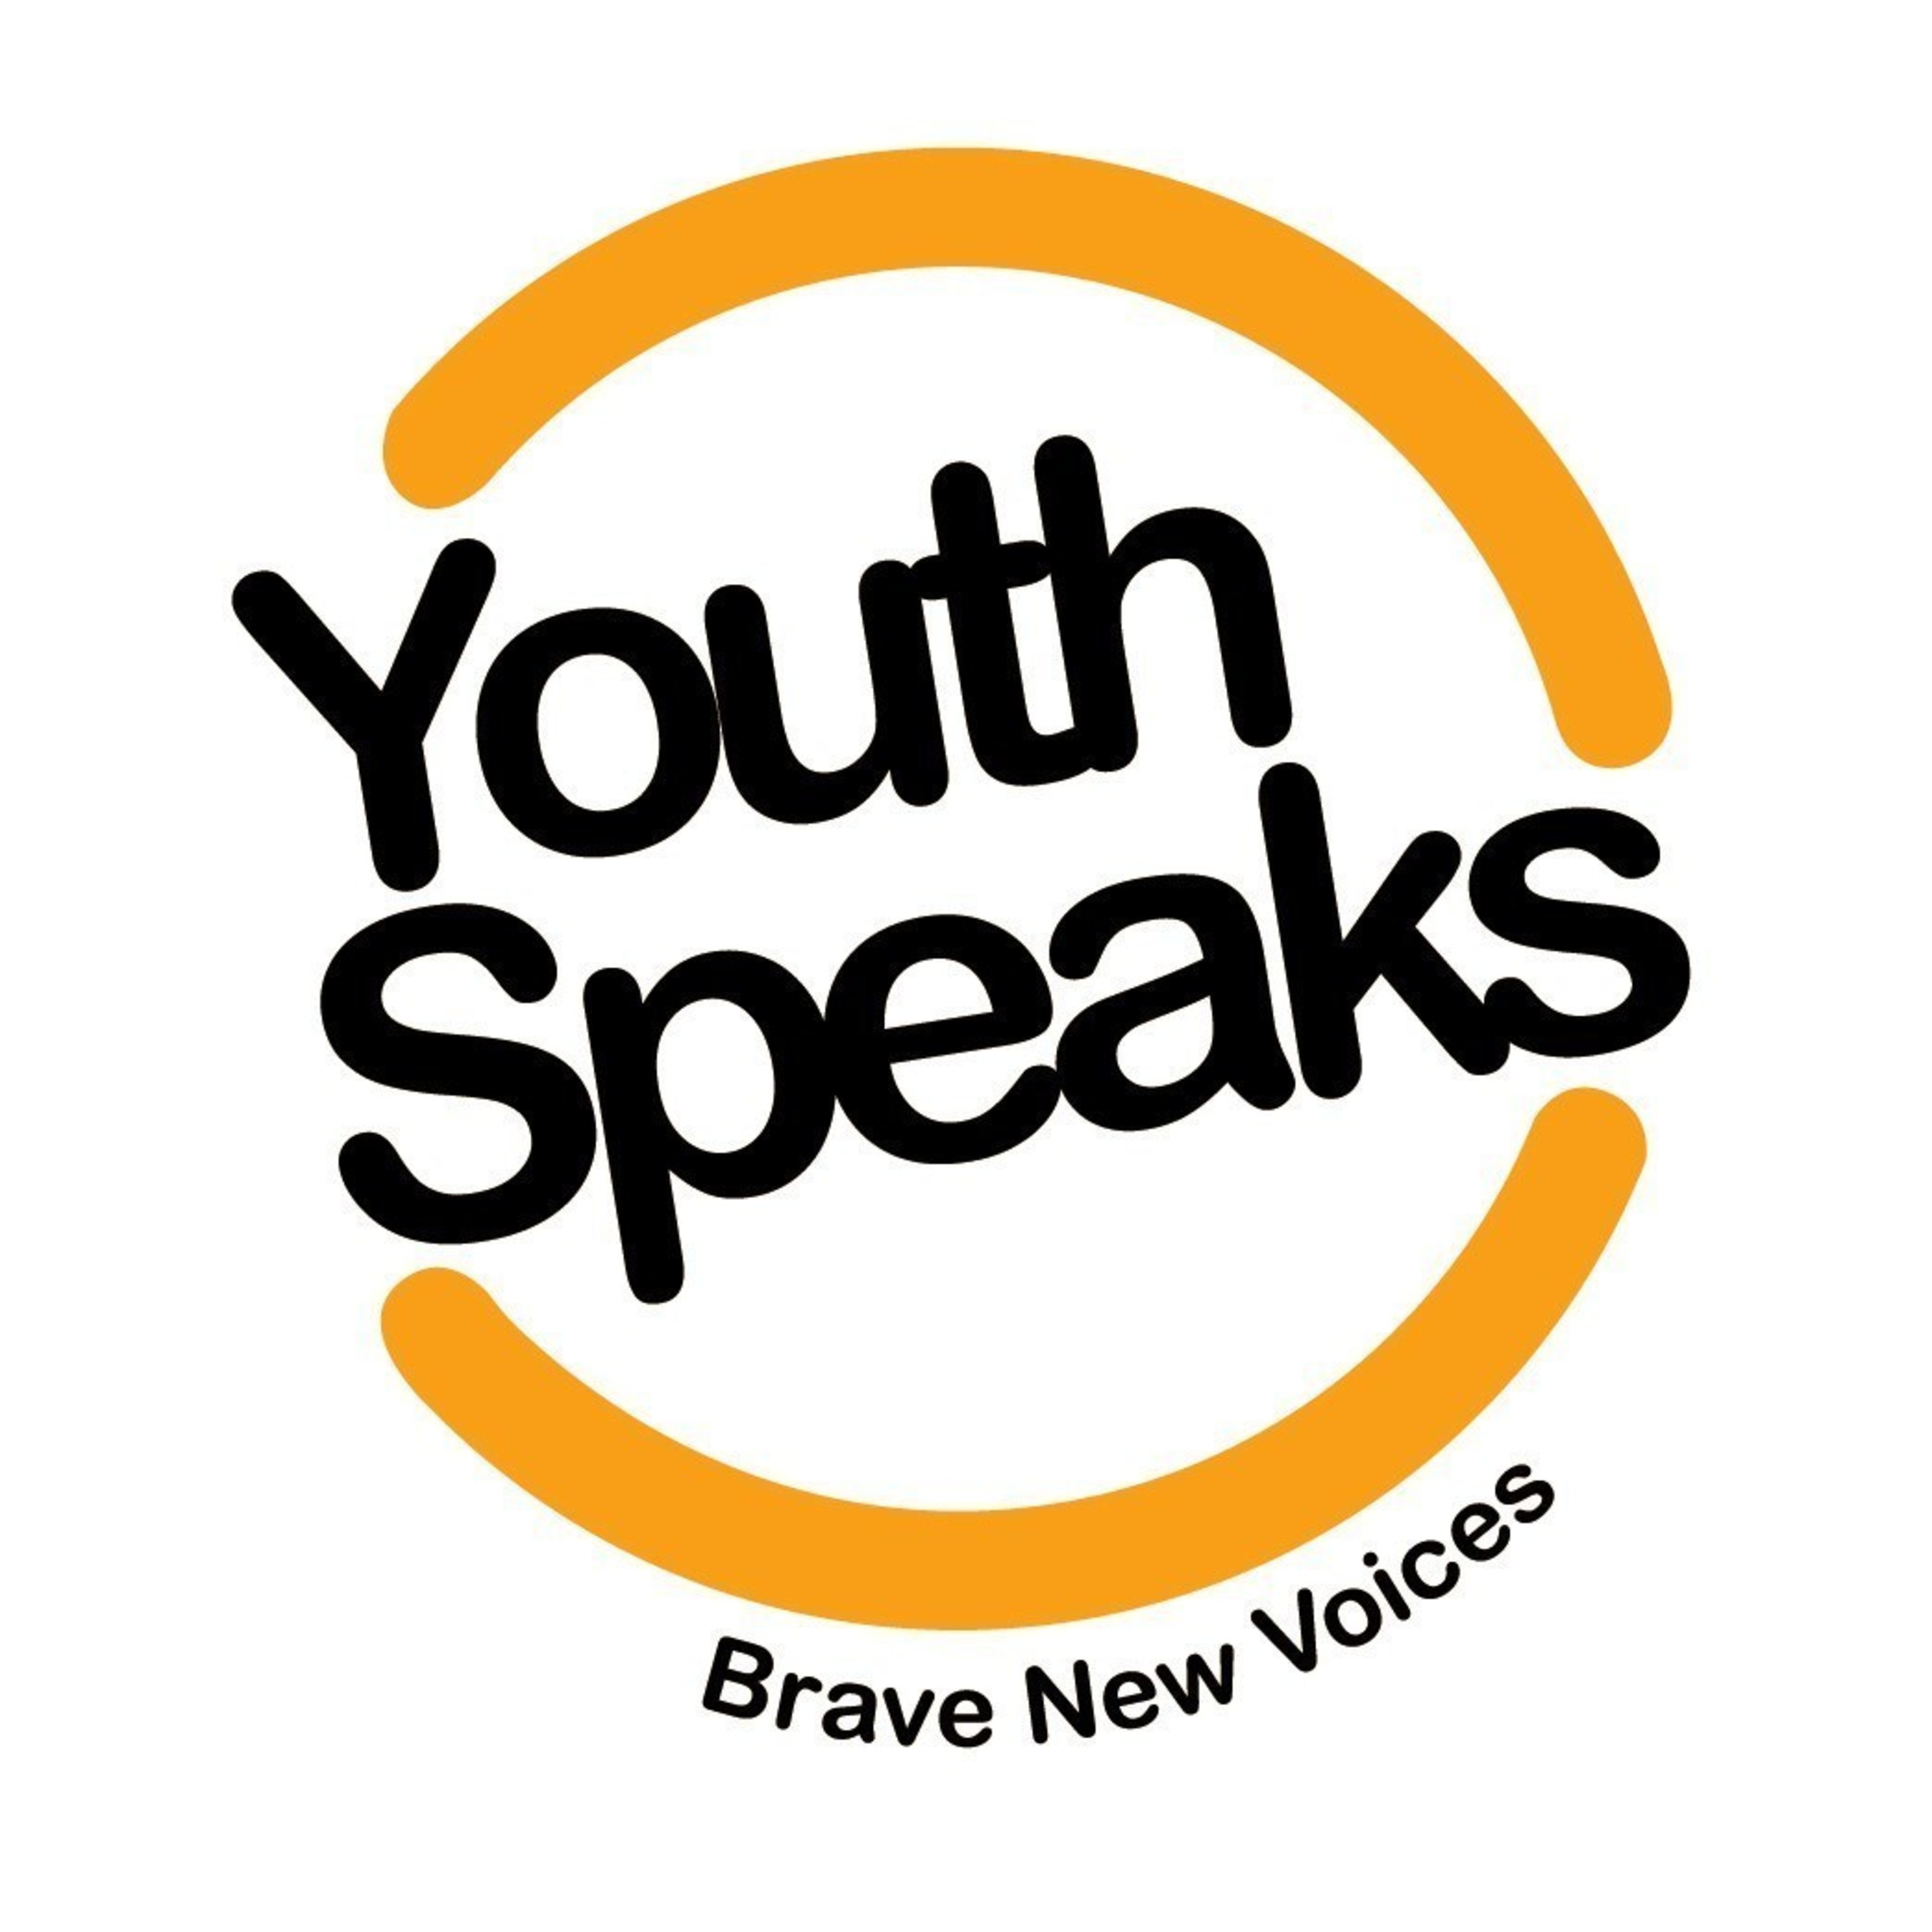 Youth Speaks Logo